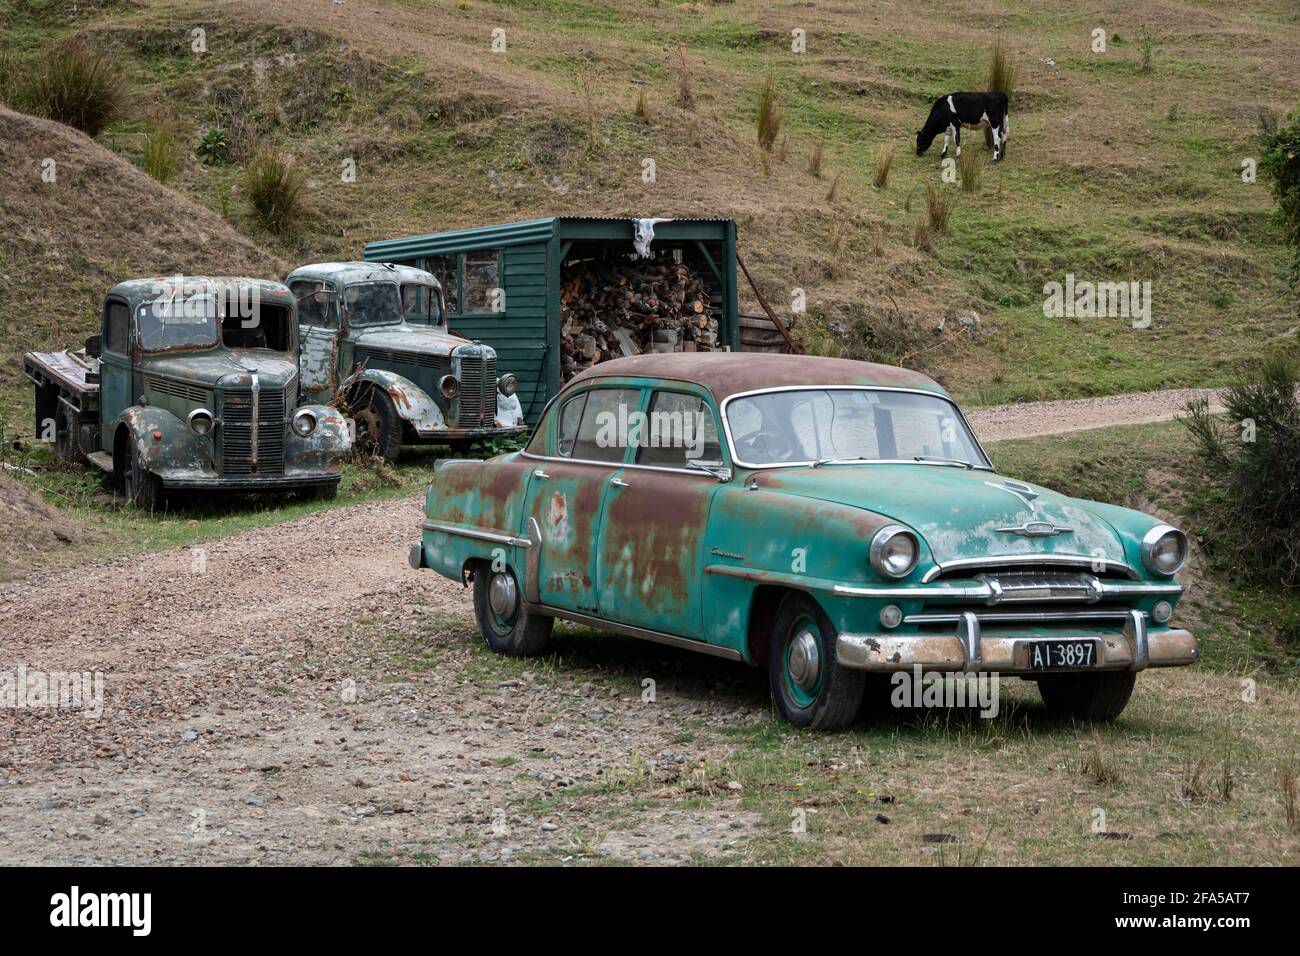 Derelict Bedford trucks, Lyttelton, Christchurch, Canterbury, South Island, New Zealand Stock Photo